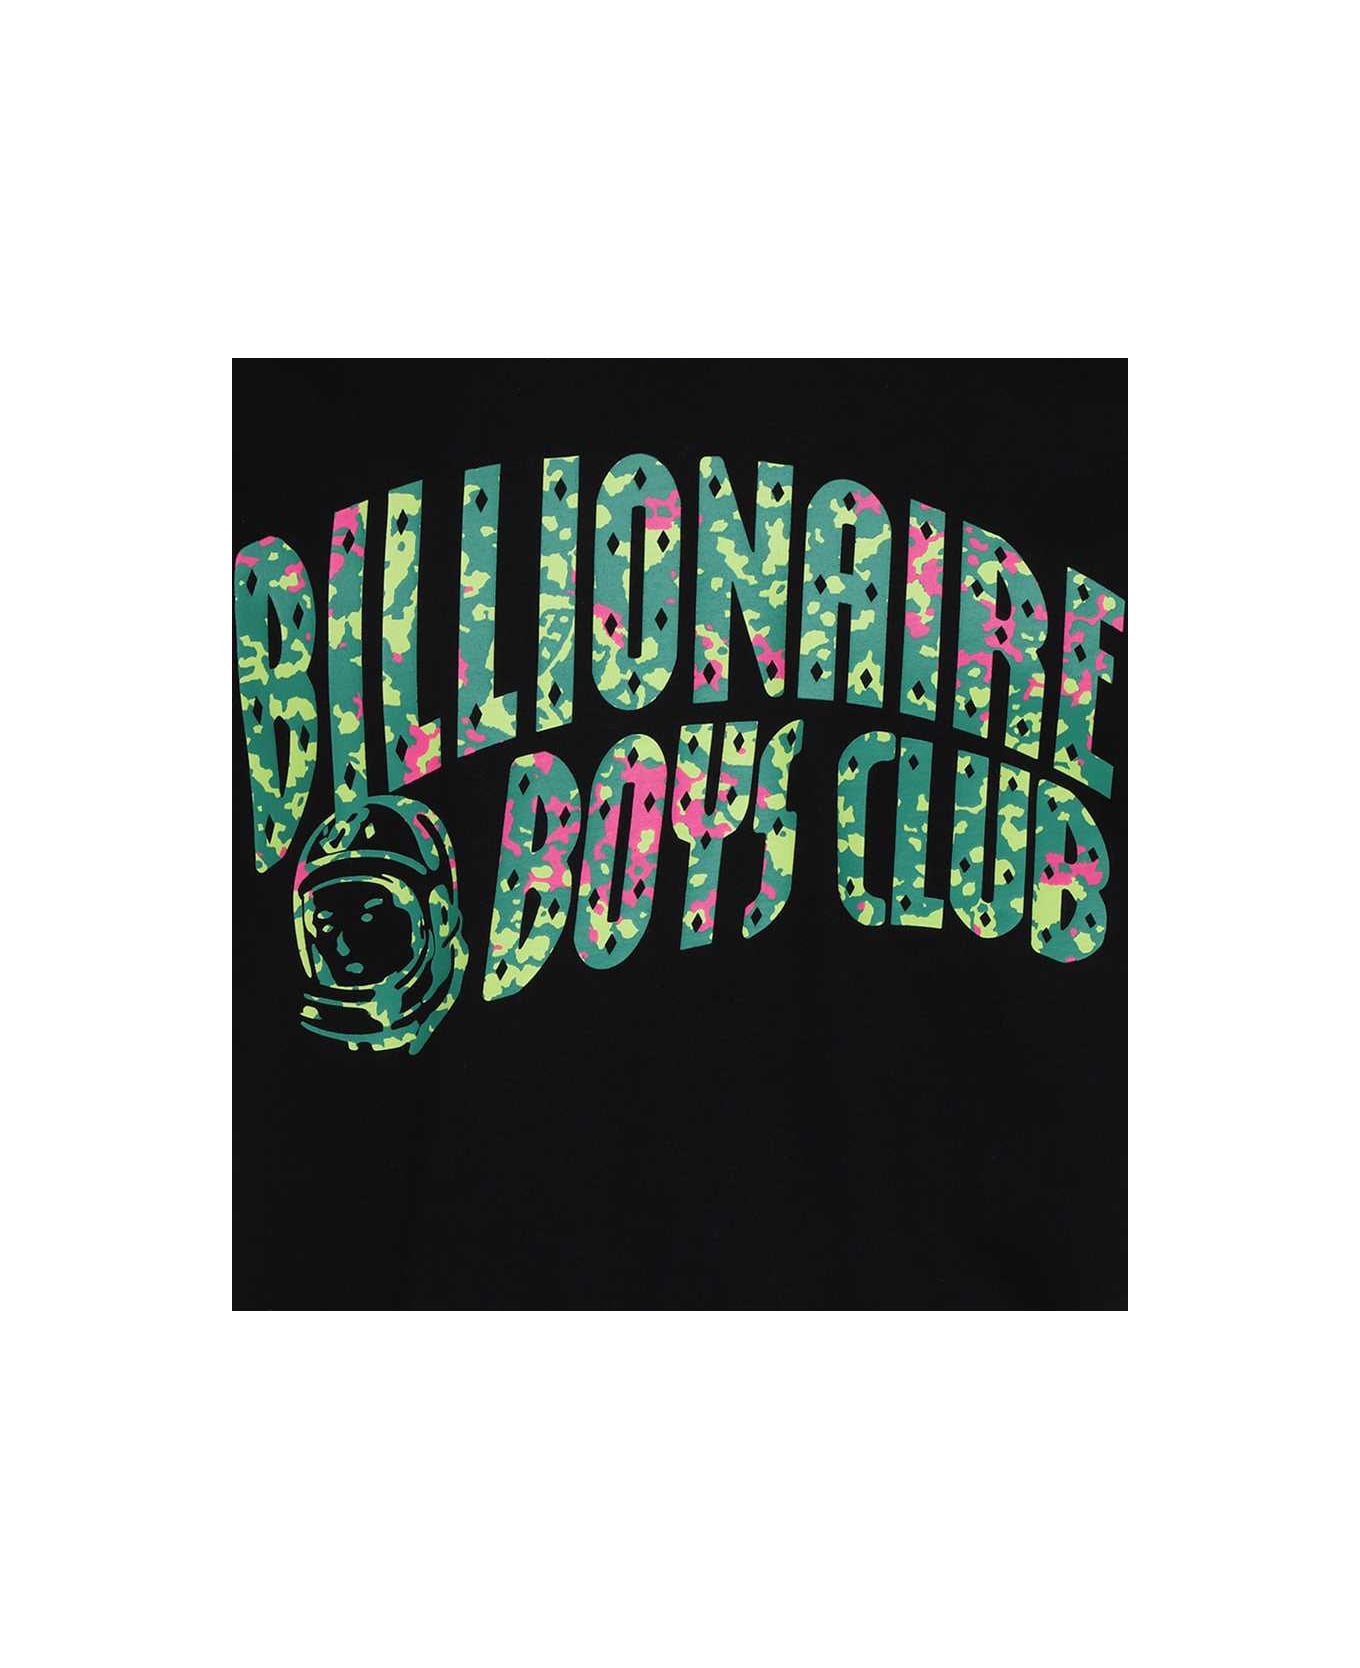 Billionaire Boys Club Cotton T-shirt - black